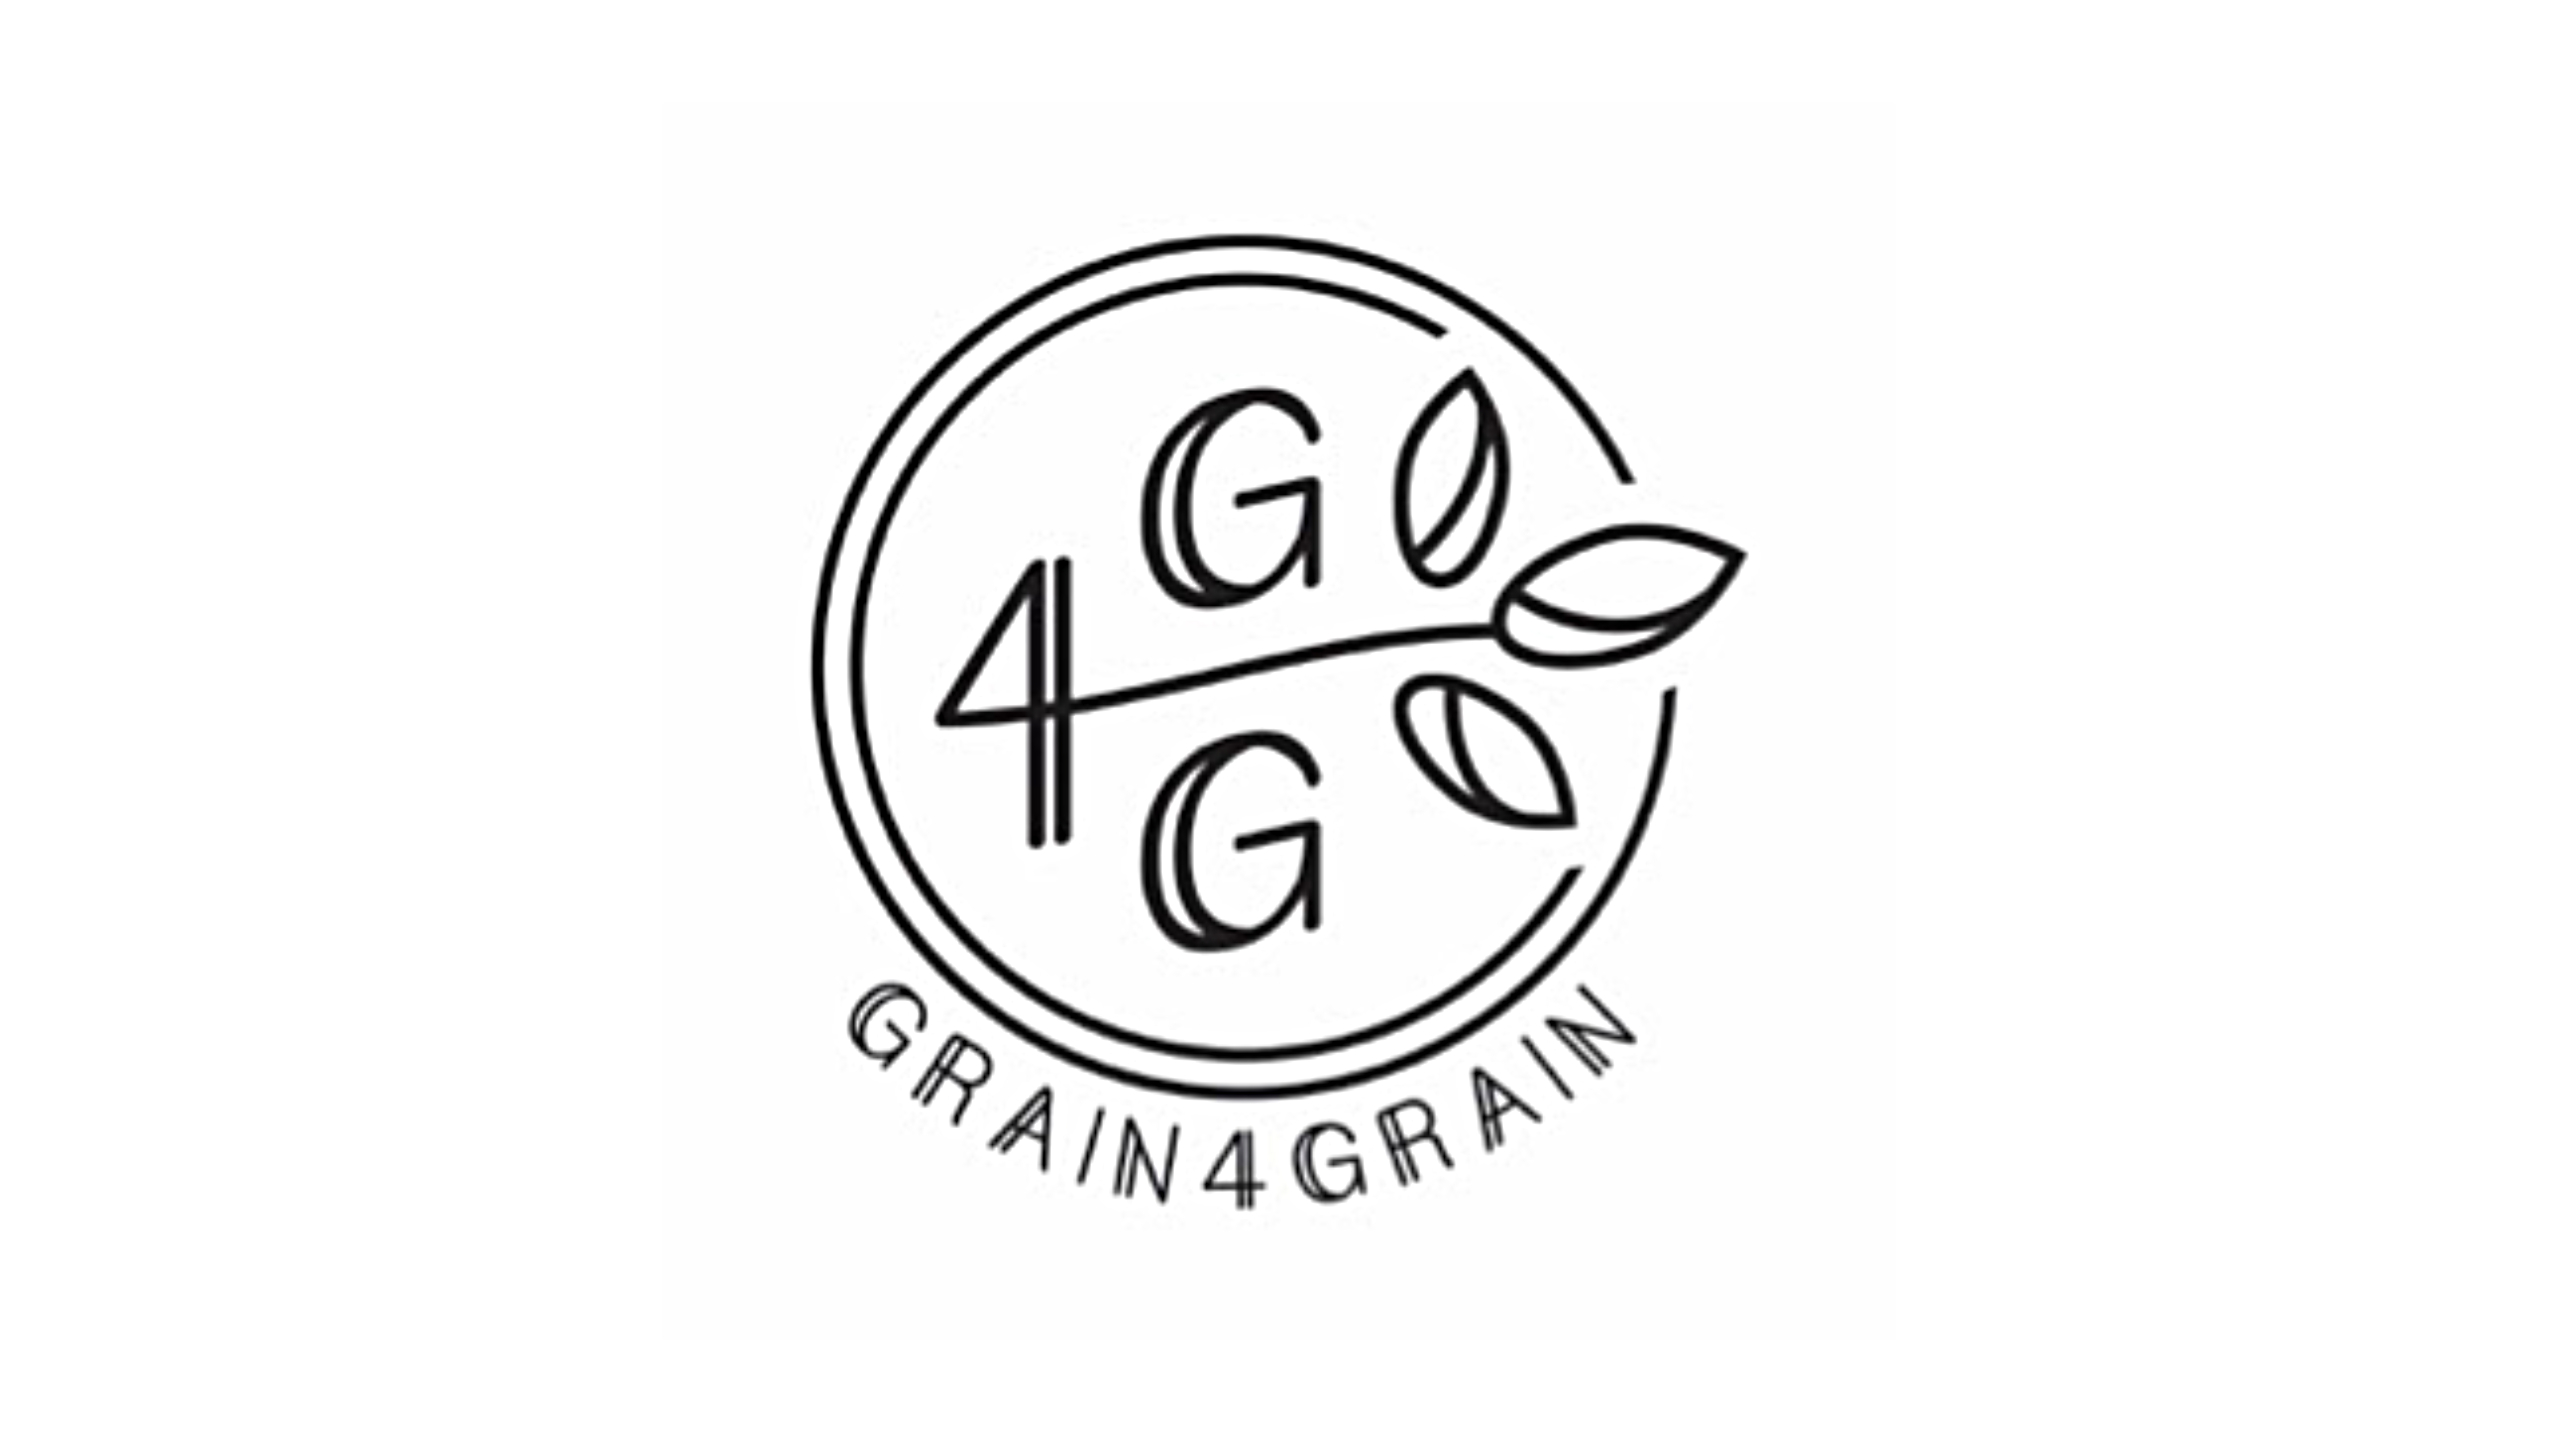 This is a photo of the Grain4Grain logo.